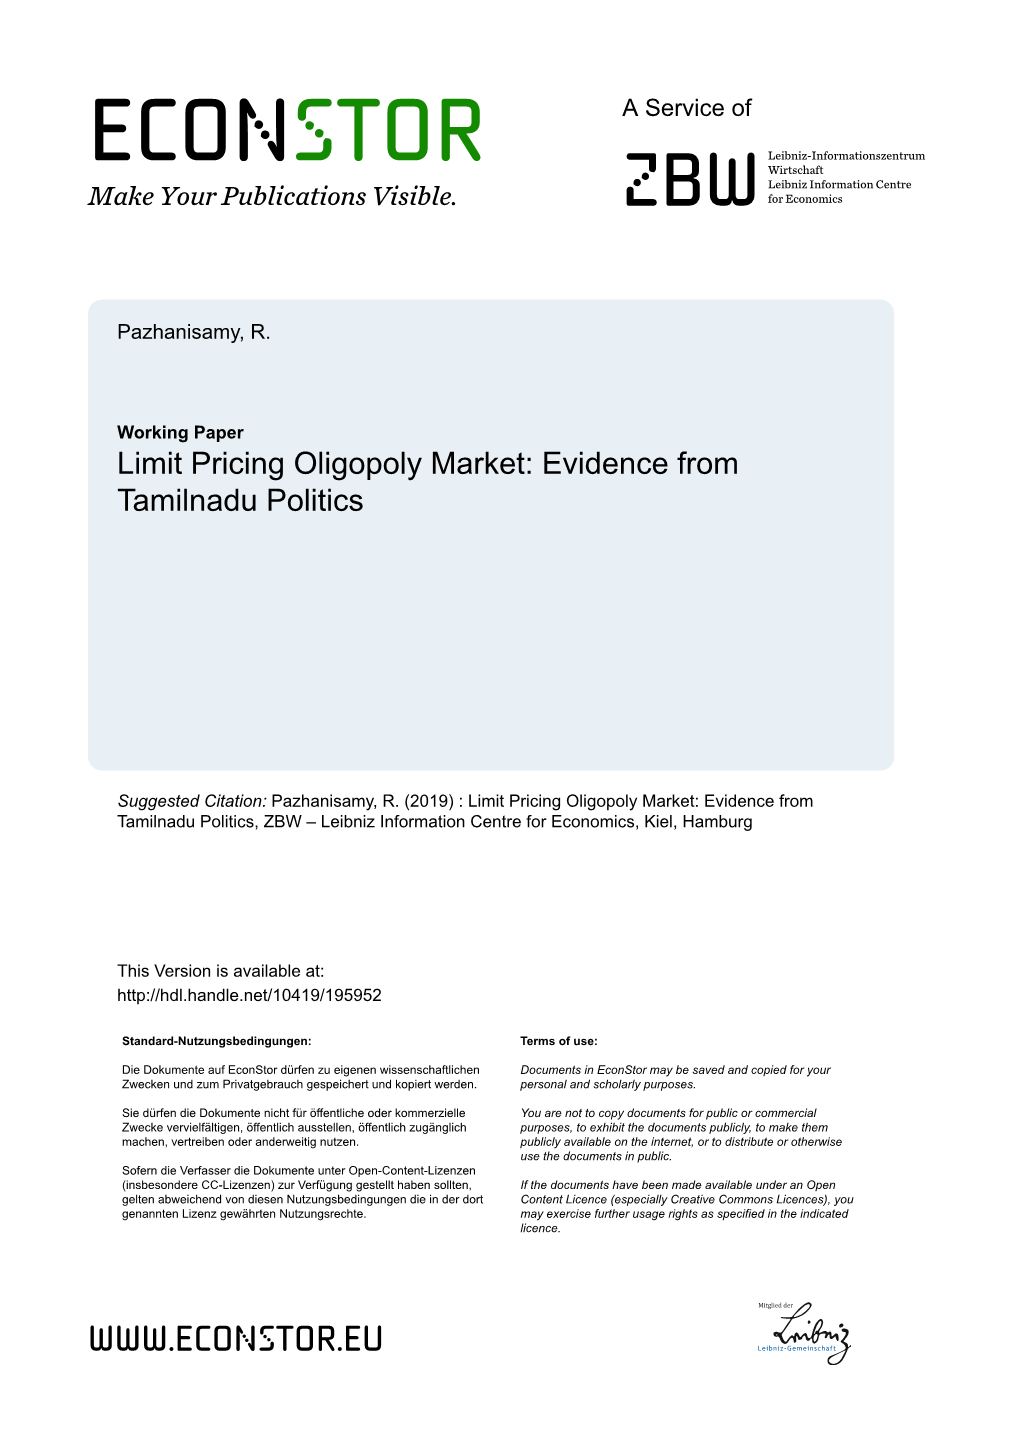 Limit Pricing Oligopoly Market: Evidence from Tamilnadu Politics